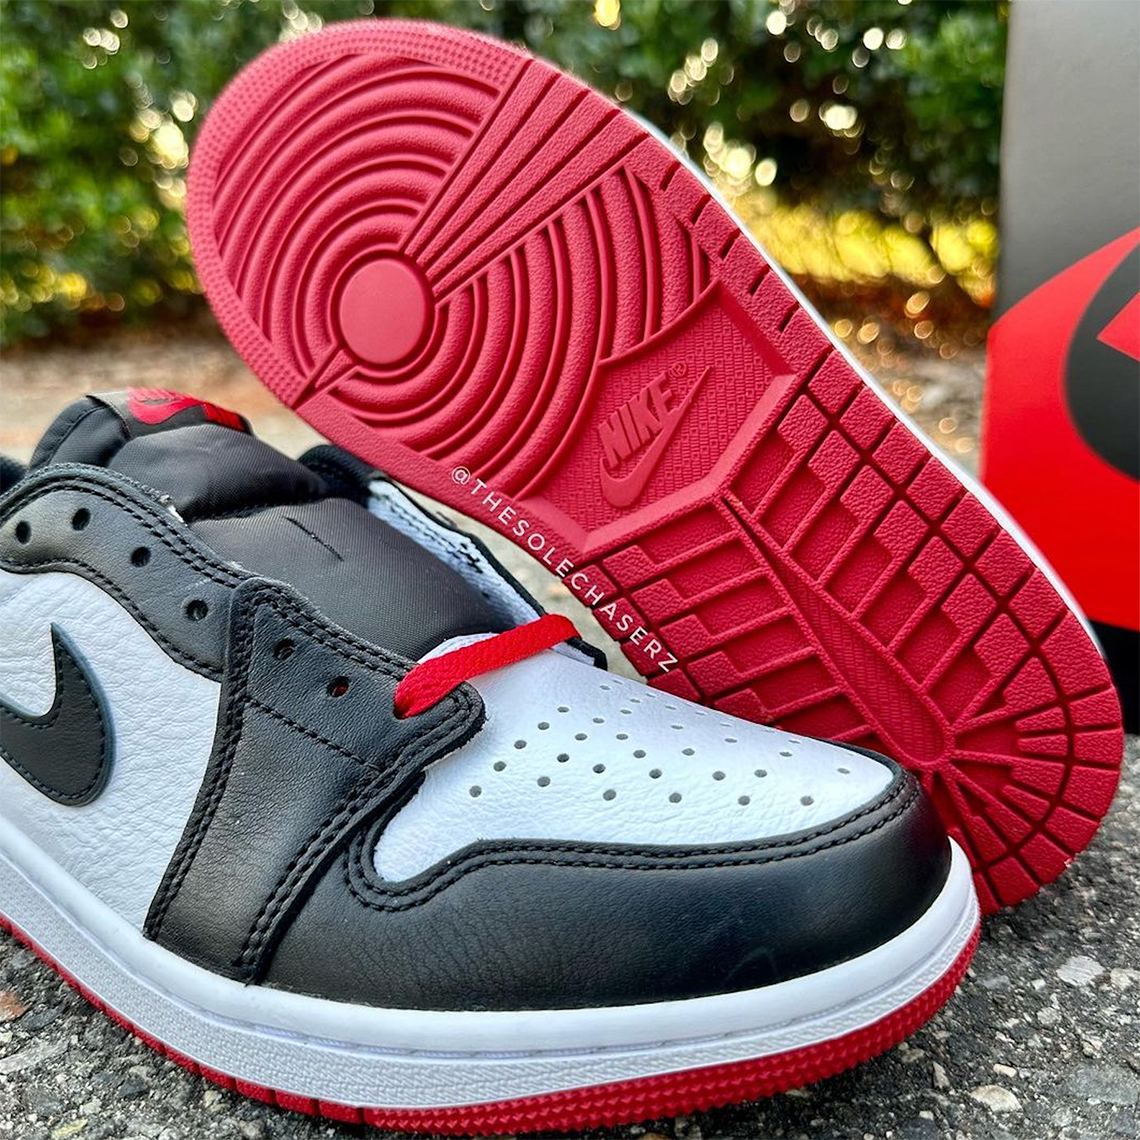 First Look: Air Jordan 1 Low OG Black Toe CZ0790-106 | SneakerNews.com